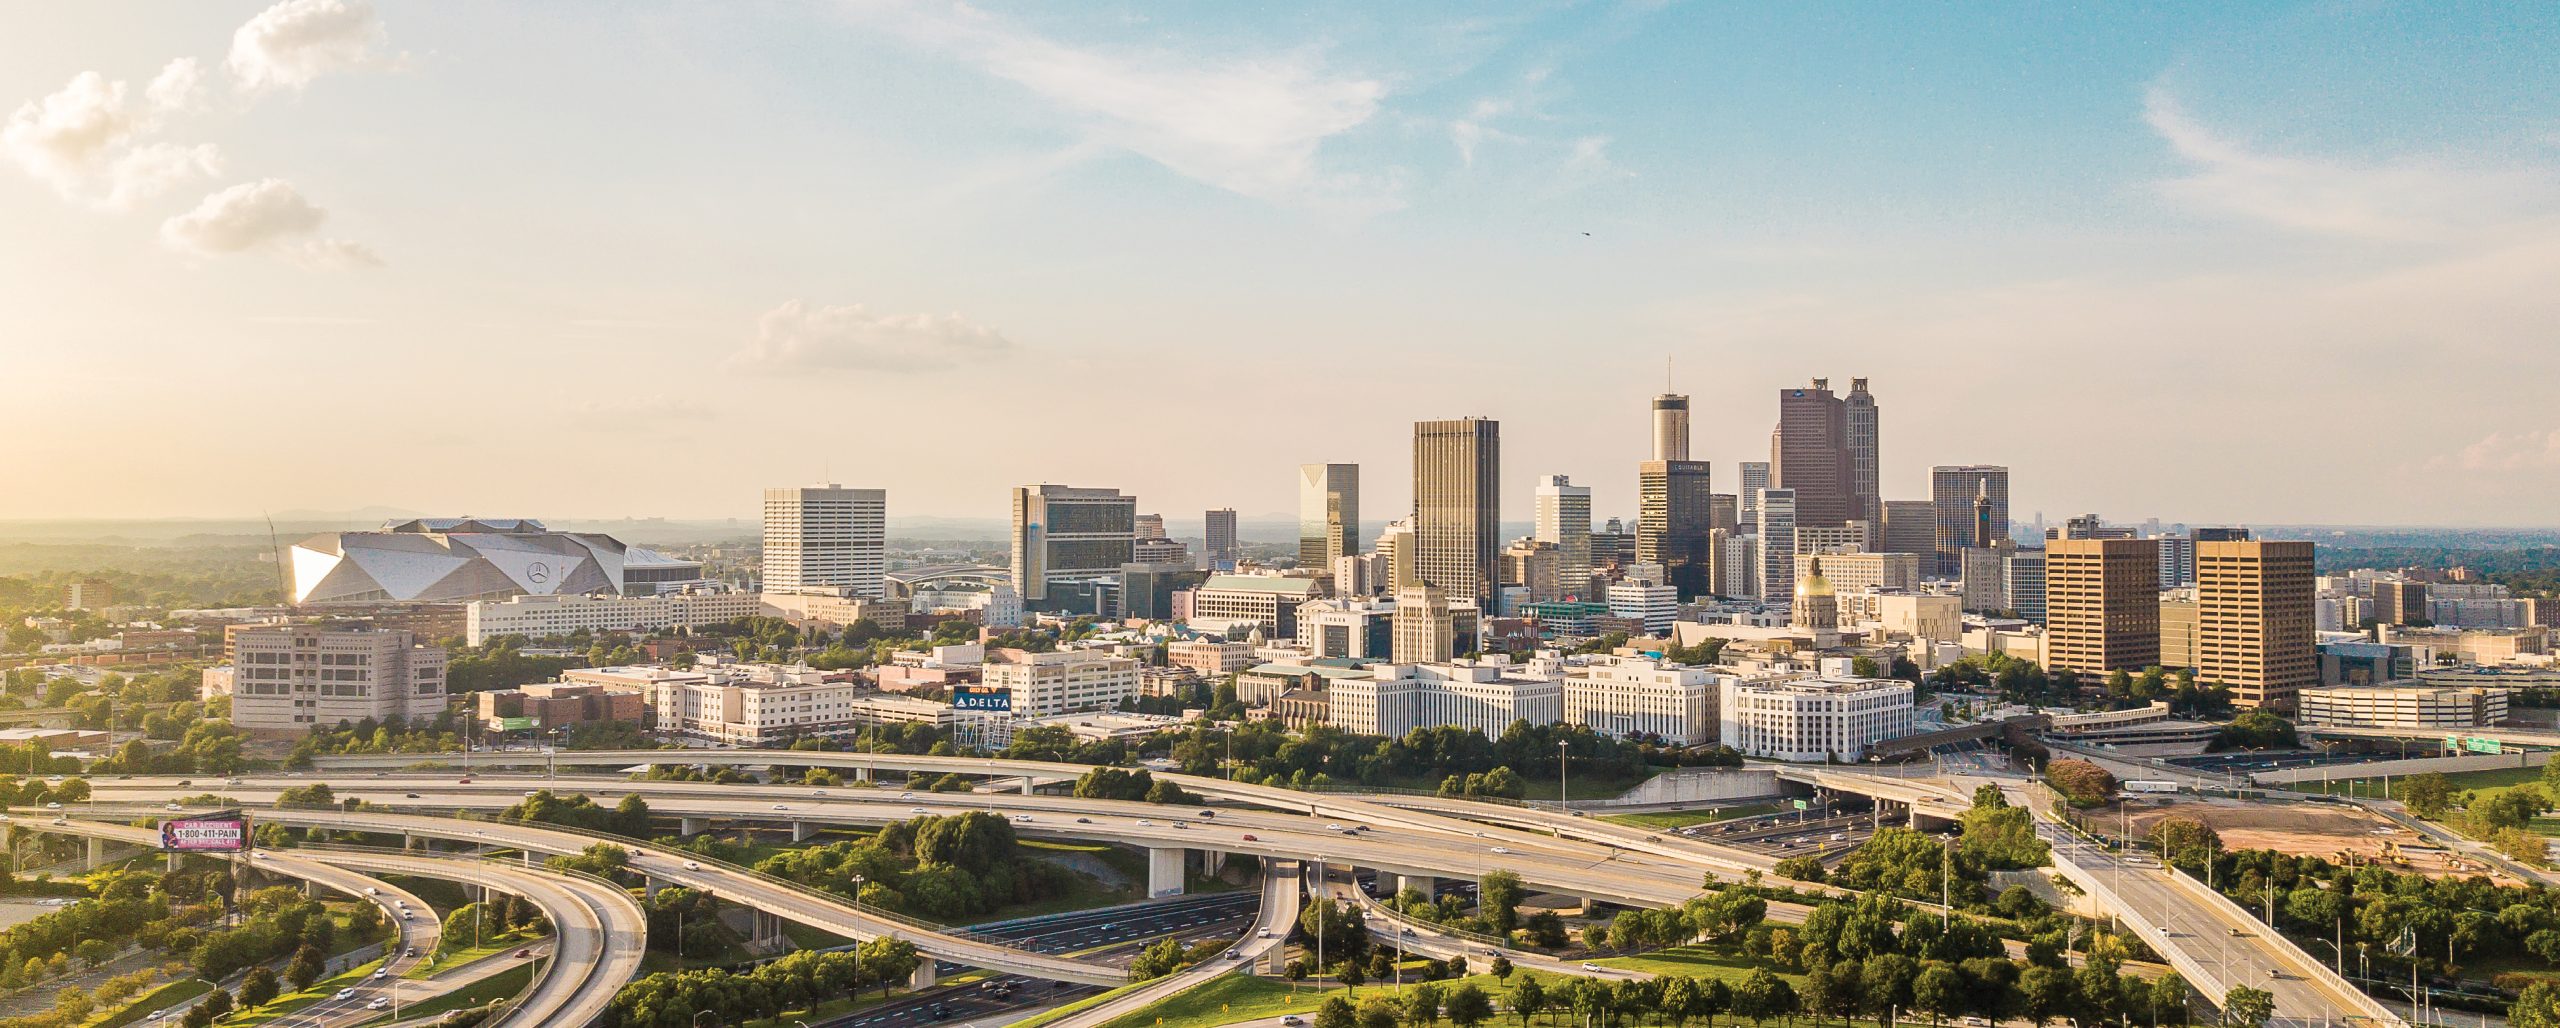 Aerial view of Atlanta roadways and industrial buildings